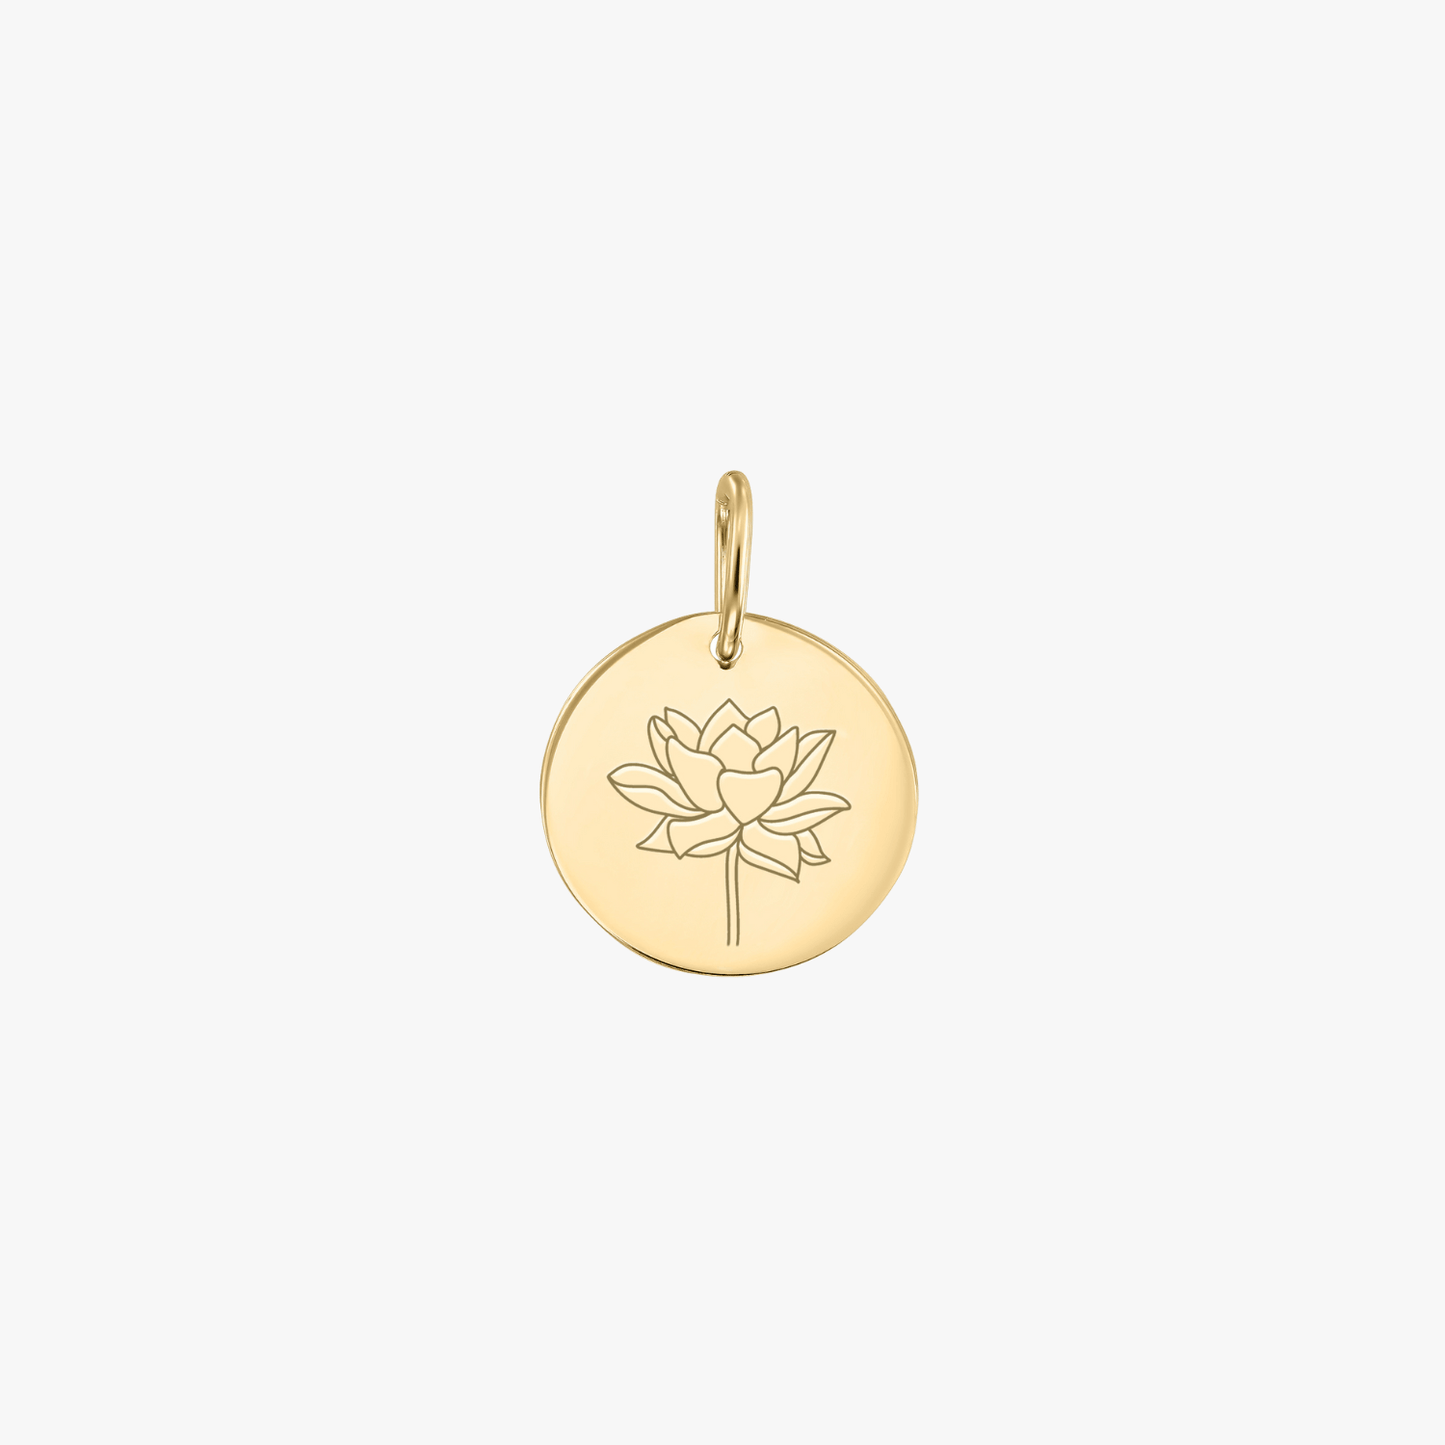 Birth Flower - July Lotus gold pendant